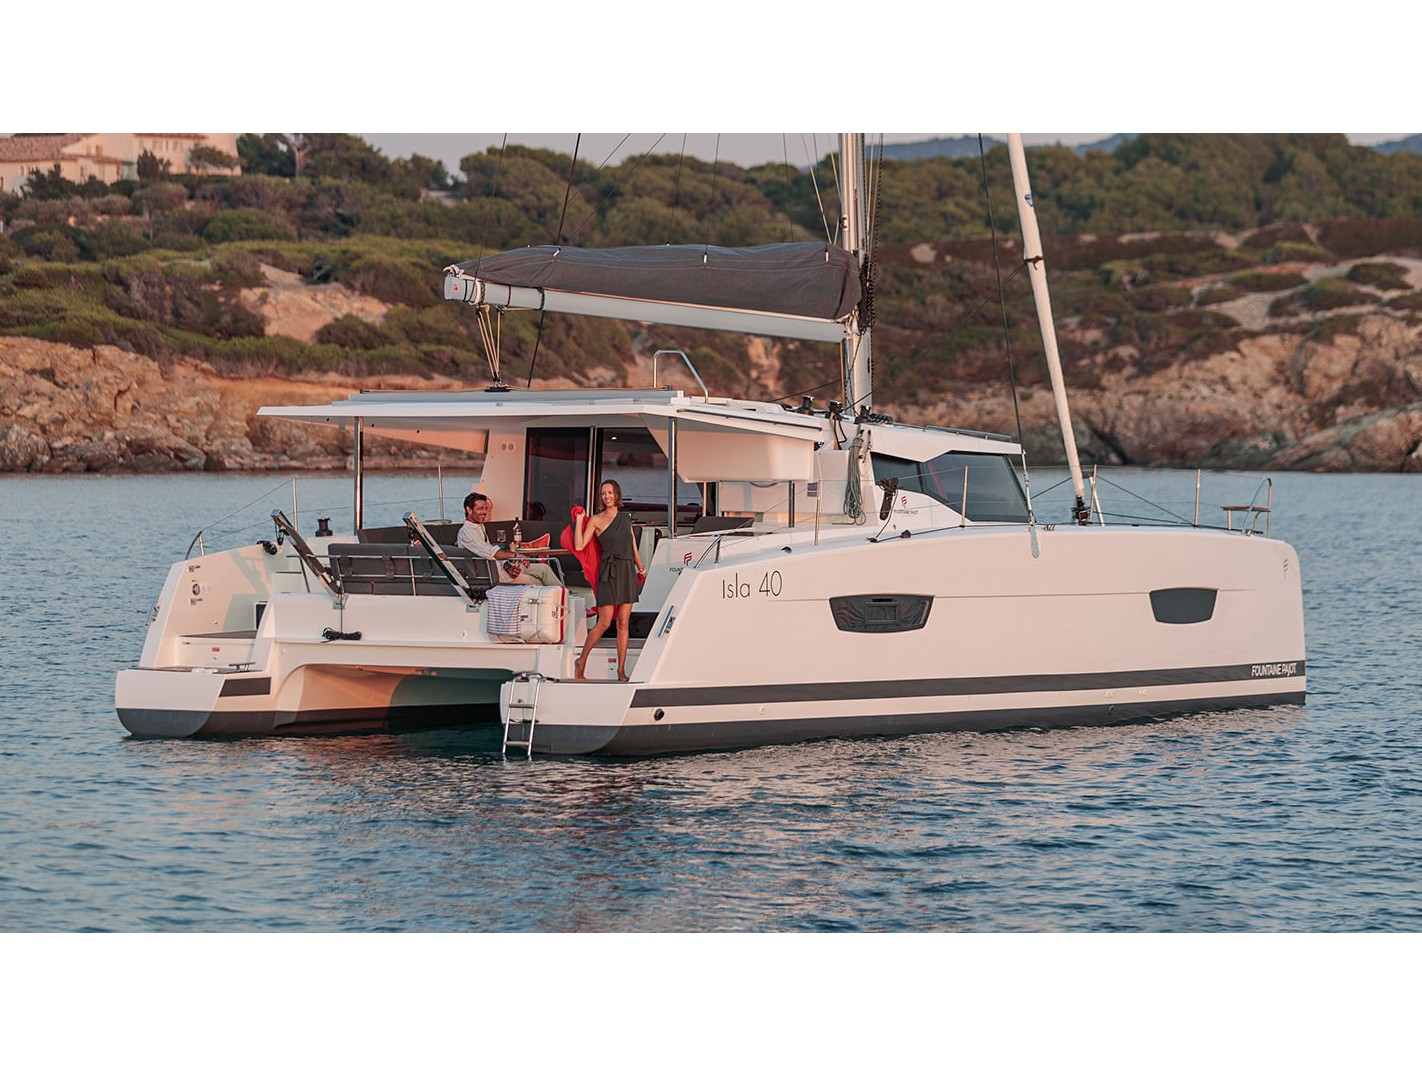 Isla 40 - Yacht Charter Pag & Boat hire in Spain Balearic Islands Mallorca Palma De Mallorca Can Pastilla Club Maritimo San Antonio De La Playa 1